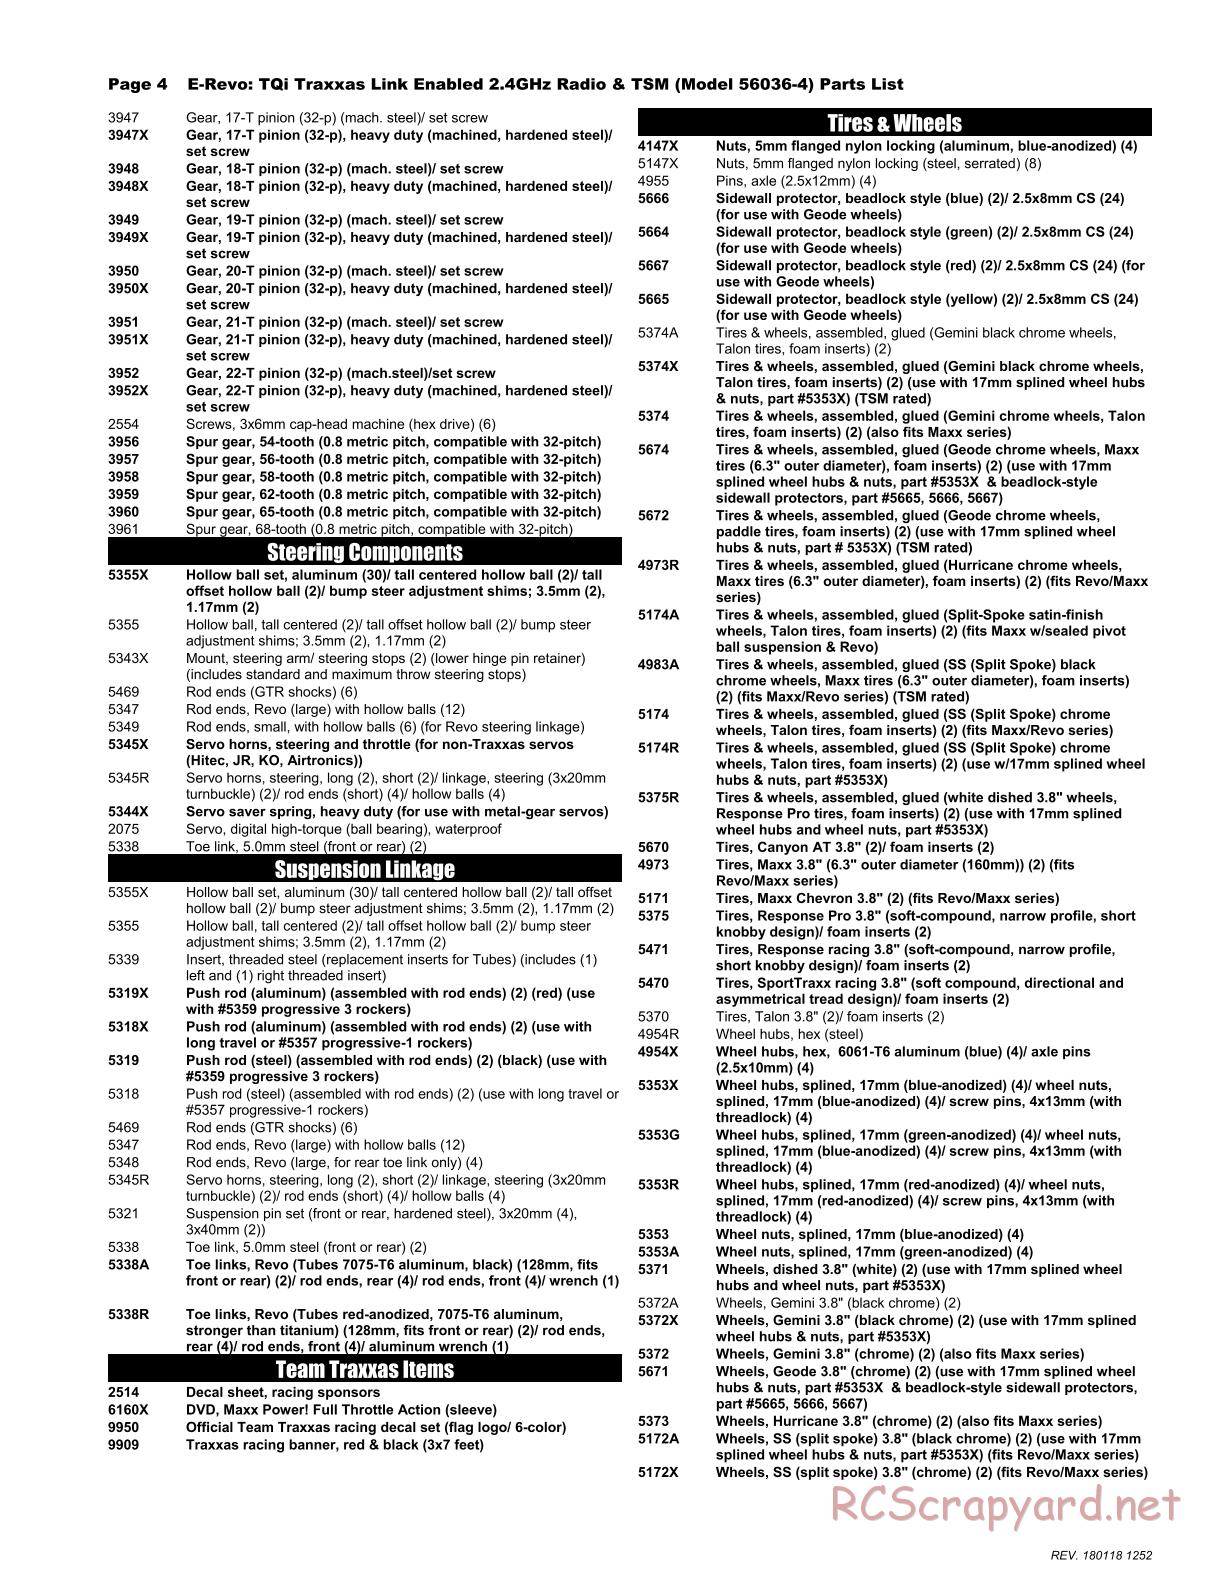 Traxxas - E-Revo TSM (2016) - Parts List - Page 4